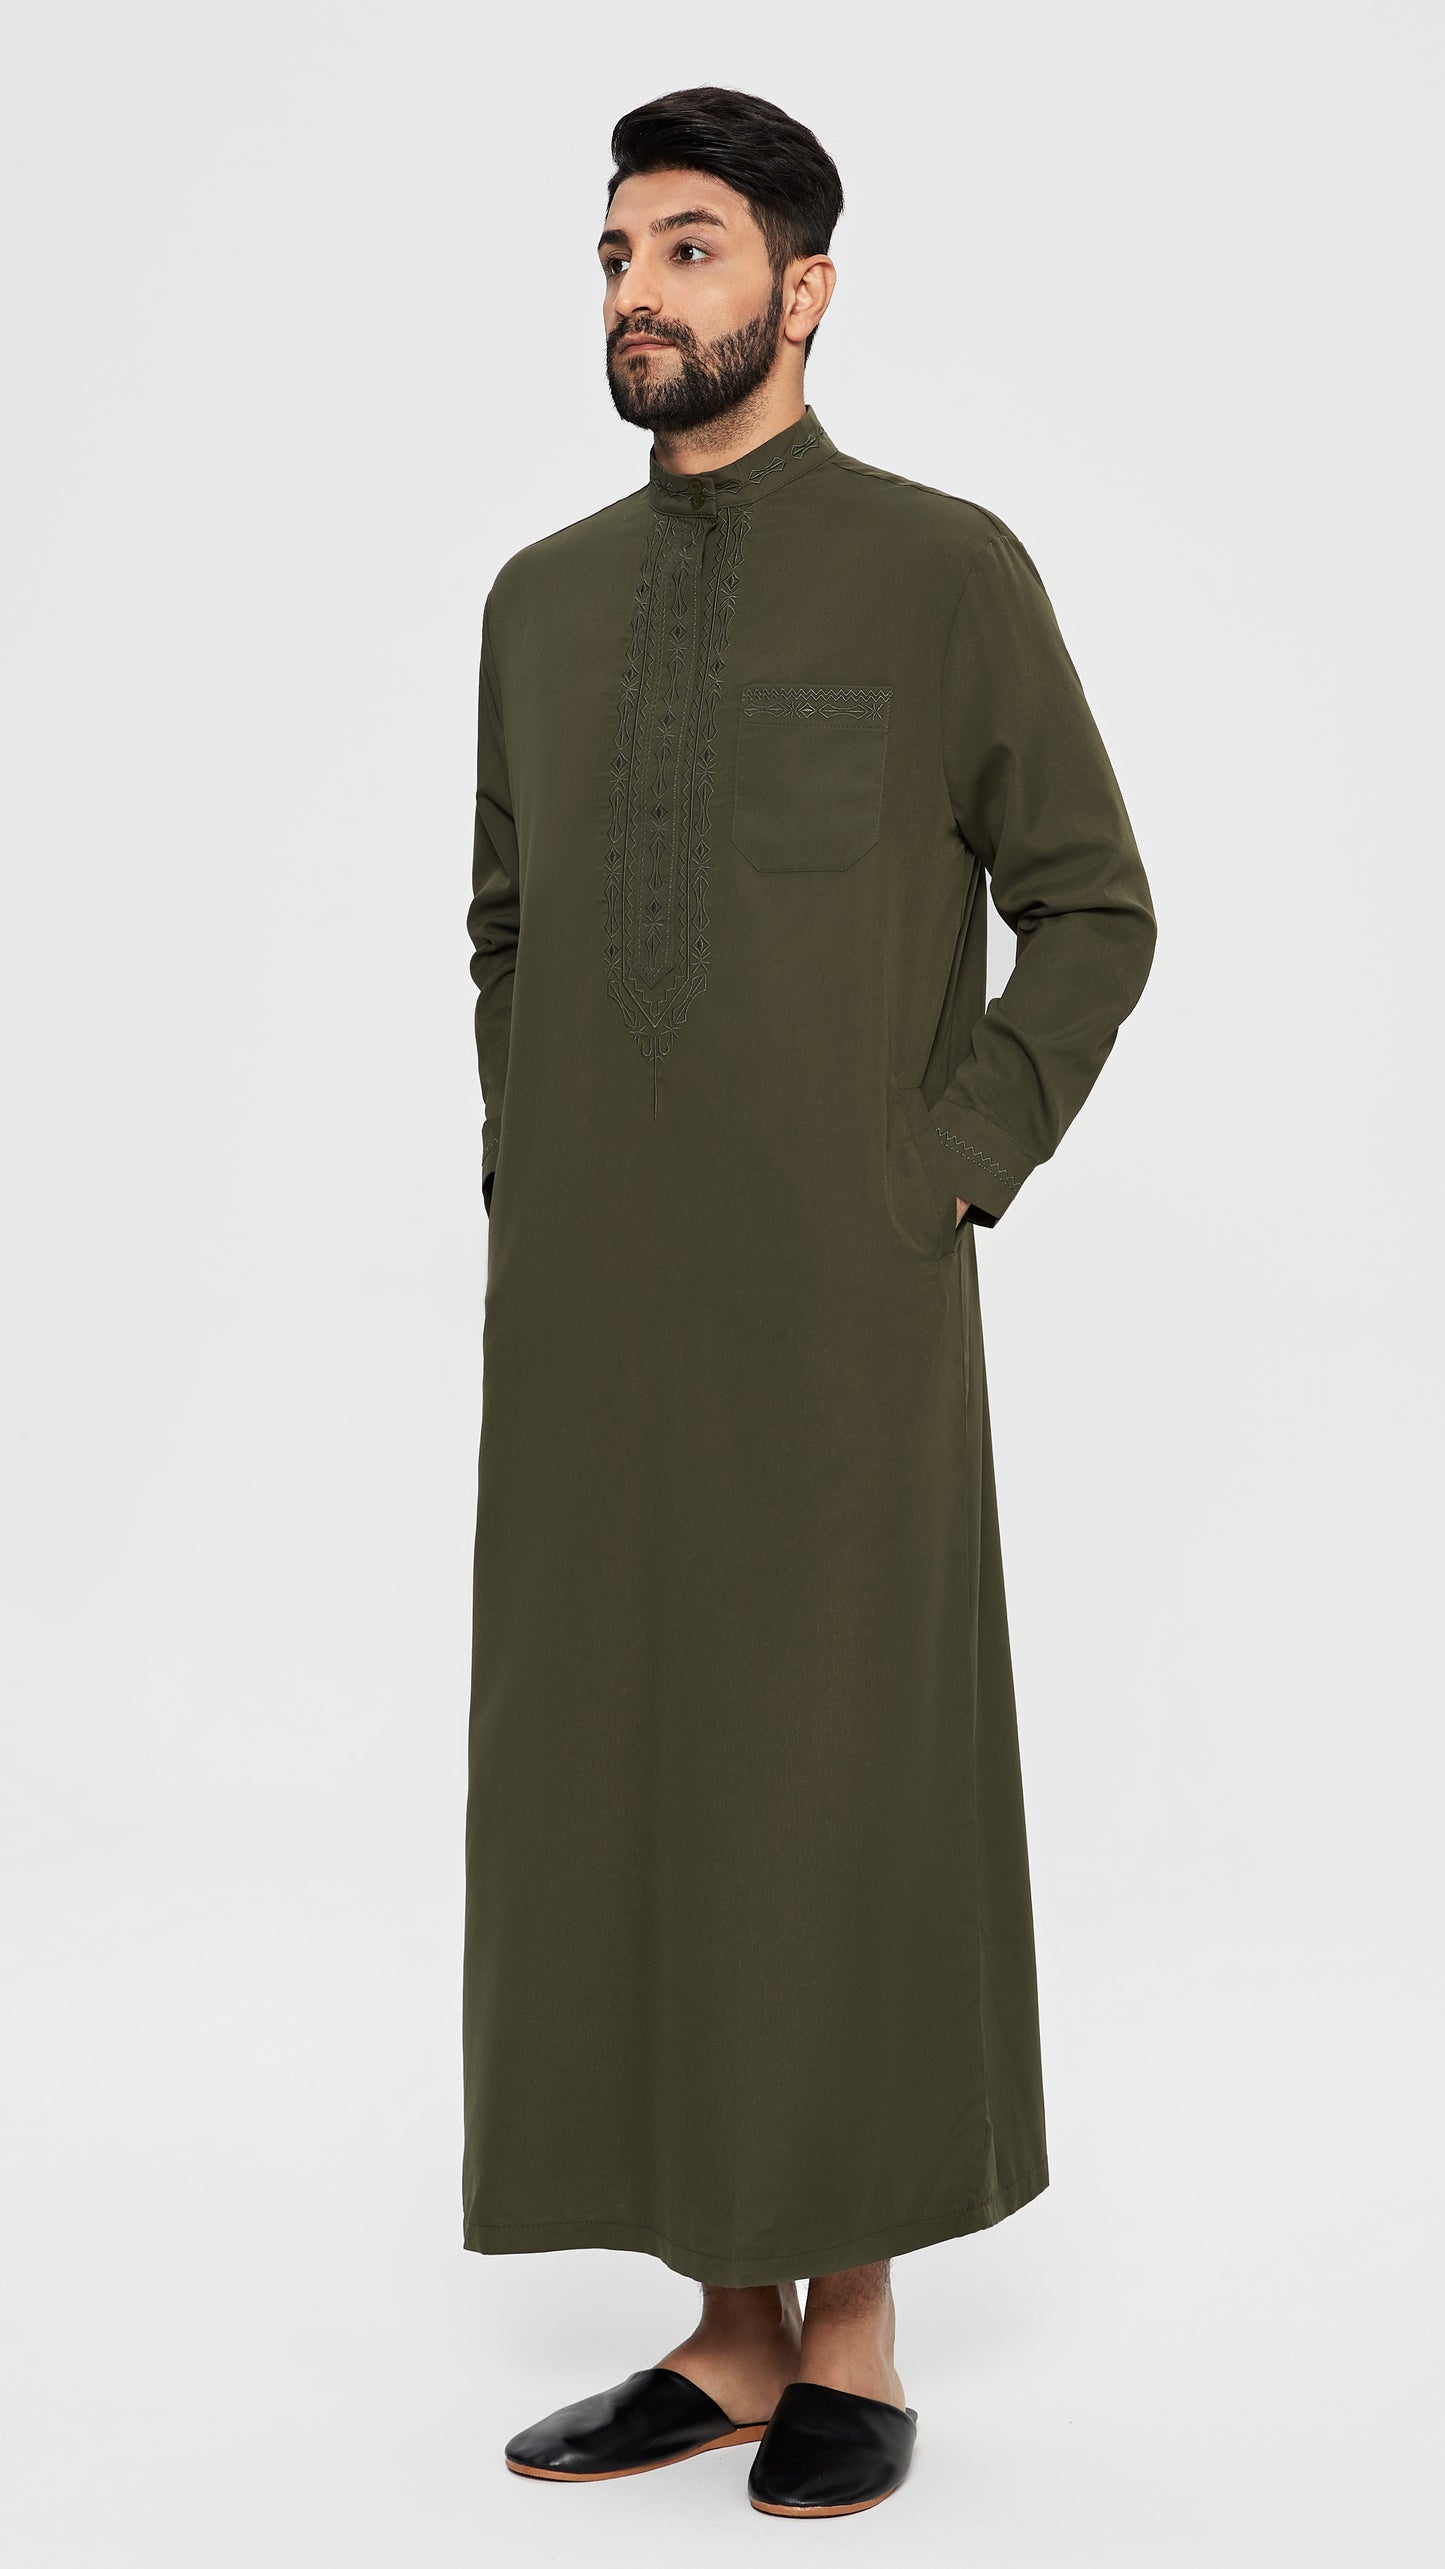 Qamis - Saoudien Kaki avec broderie cravate